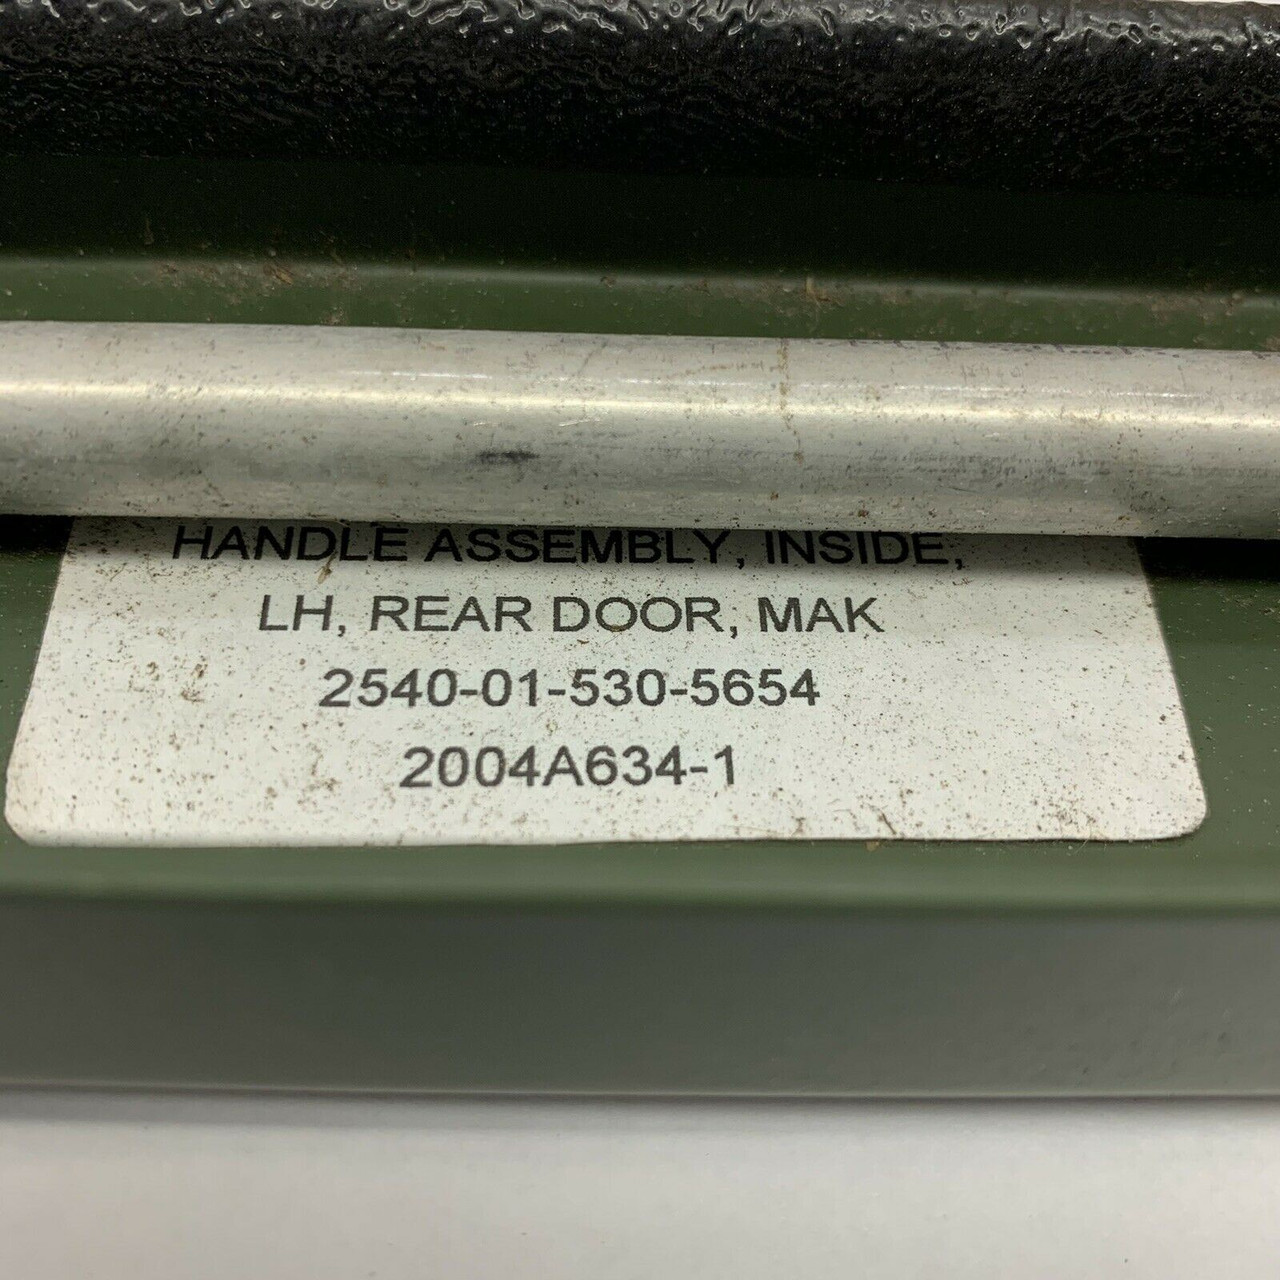 Hmmwv MAK Rear Door Left-Hand Inside Handle Assembly 2004A634-1